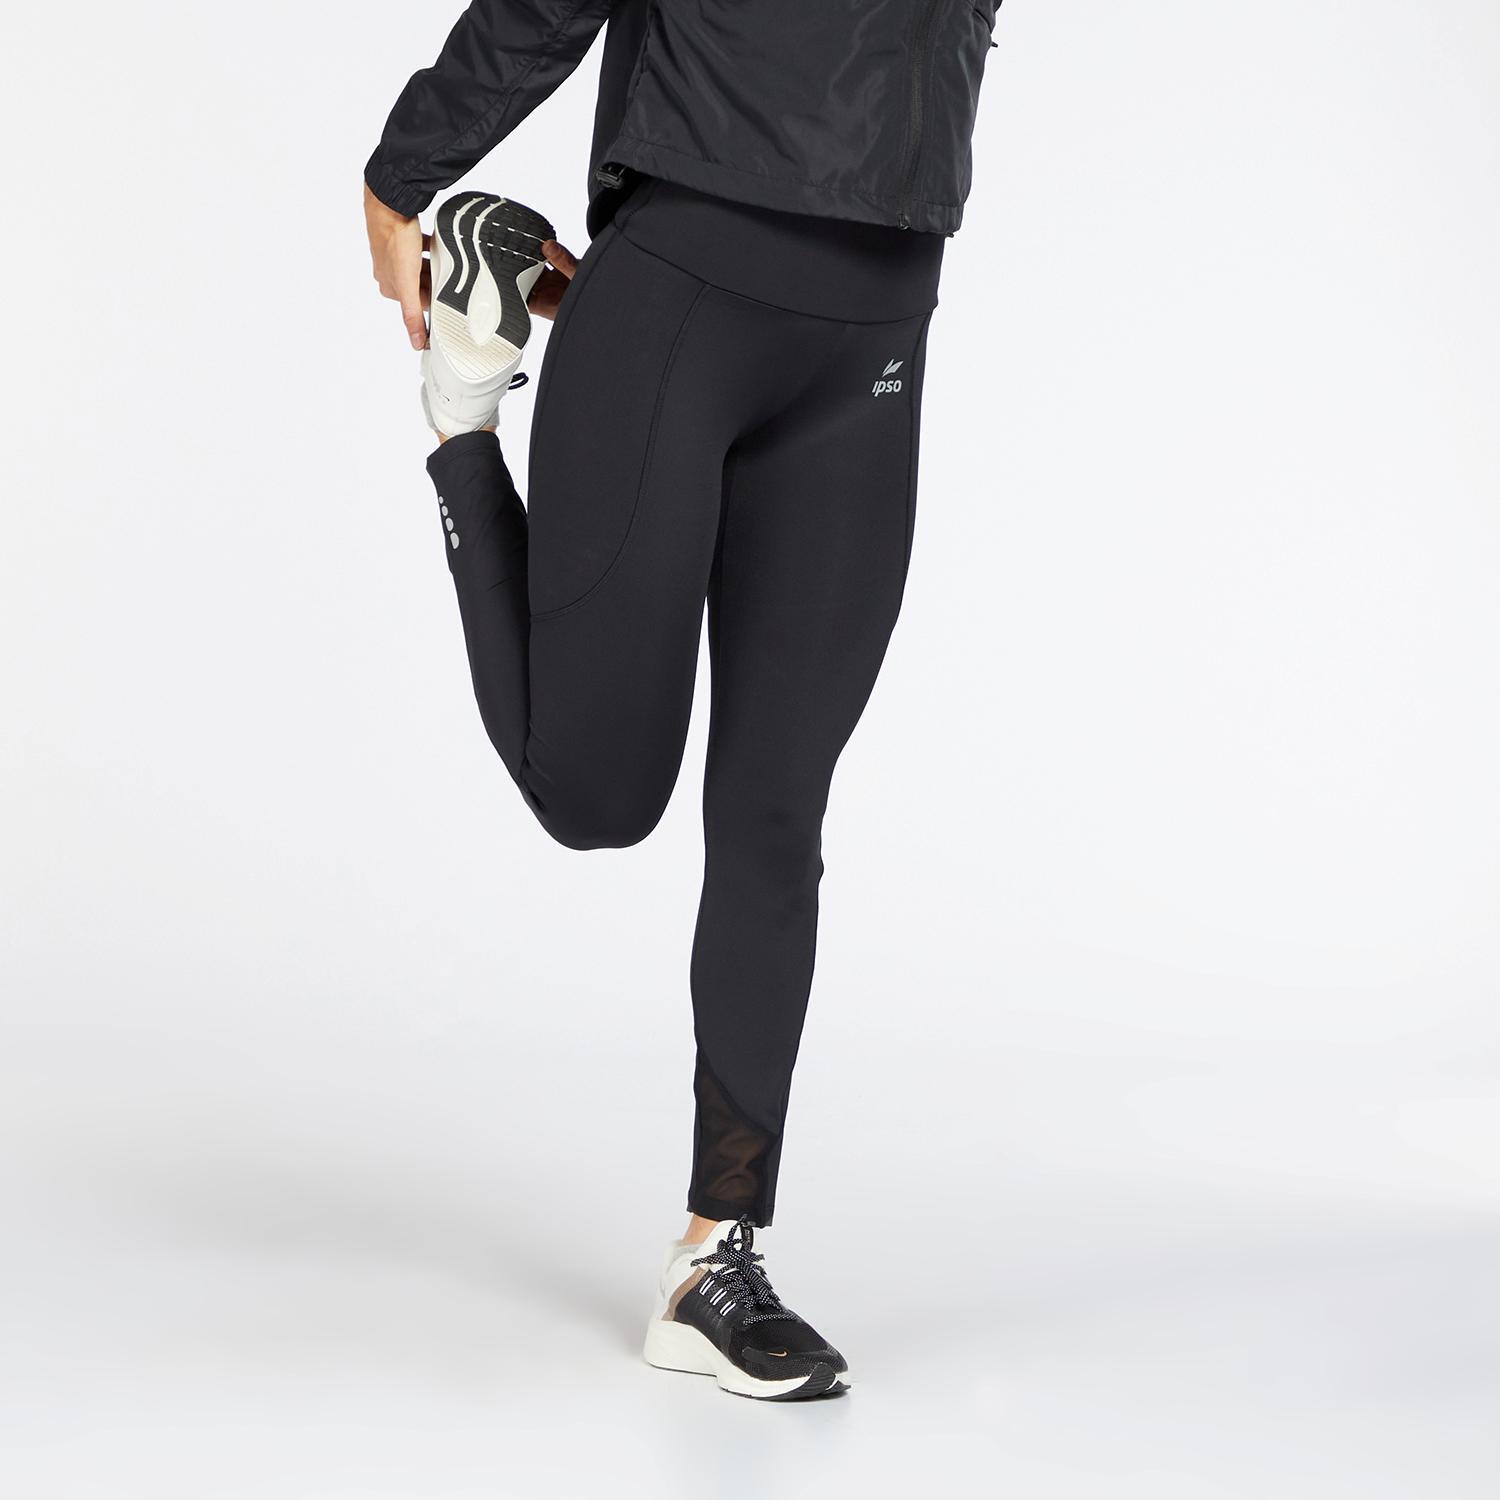 Ipso Experience 1-Noir-Legging Running Femme sports taille L